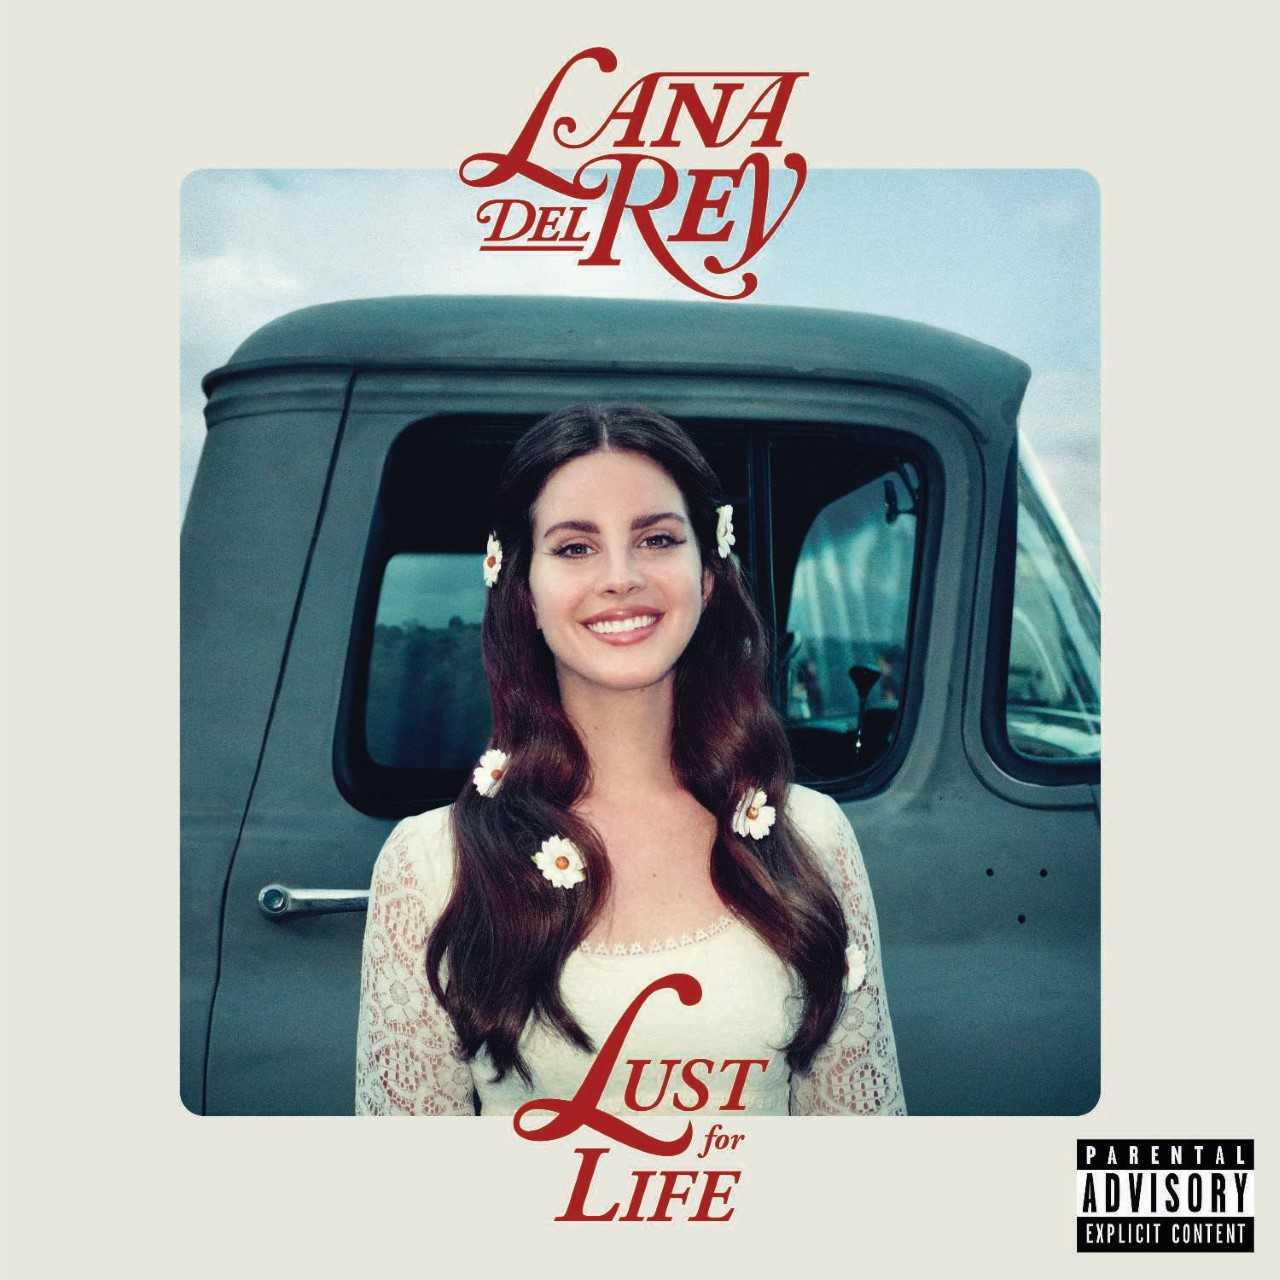 Lana Del Rey: Περισσότερες λεπτομέρειες για το νέο της άλμπουμ